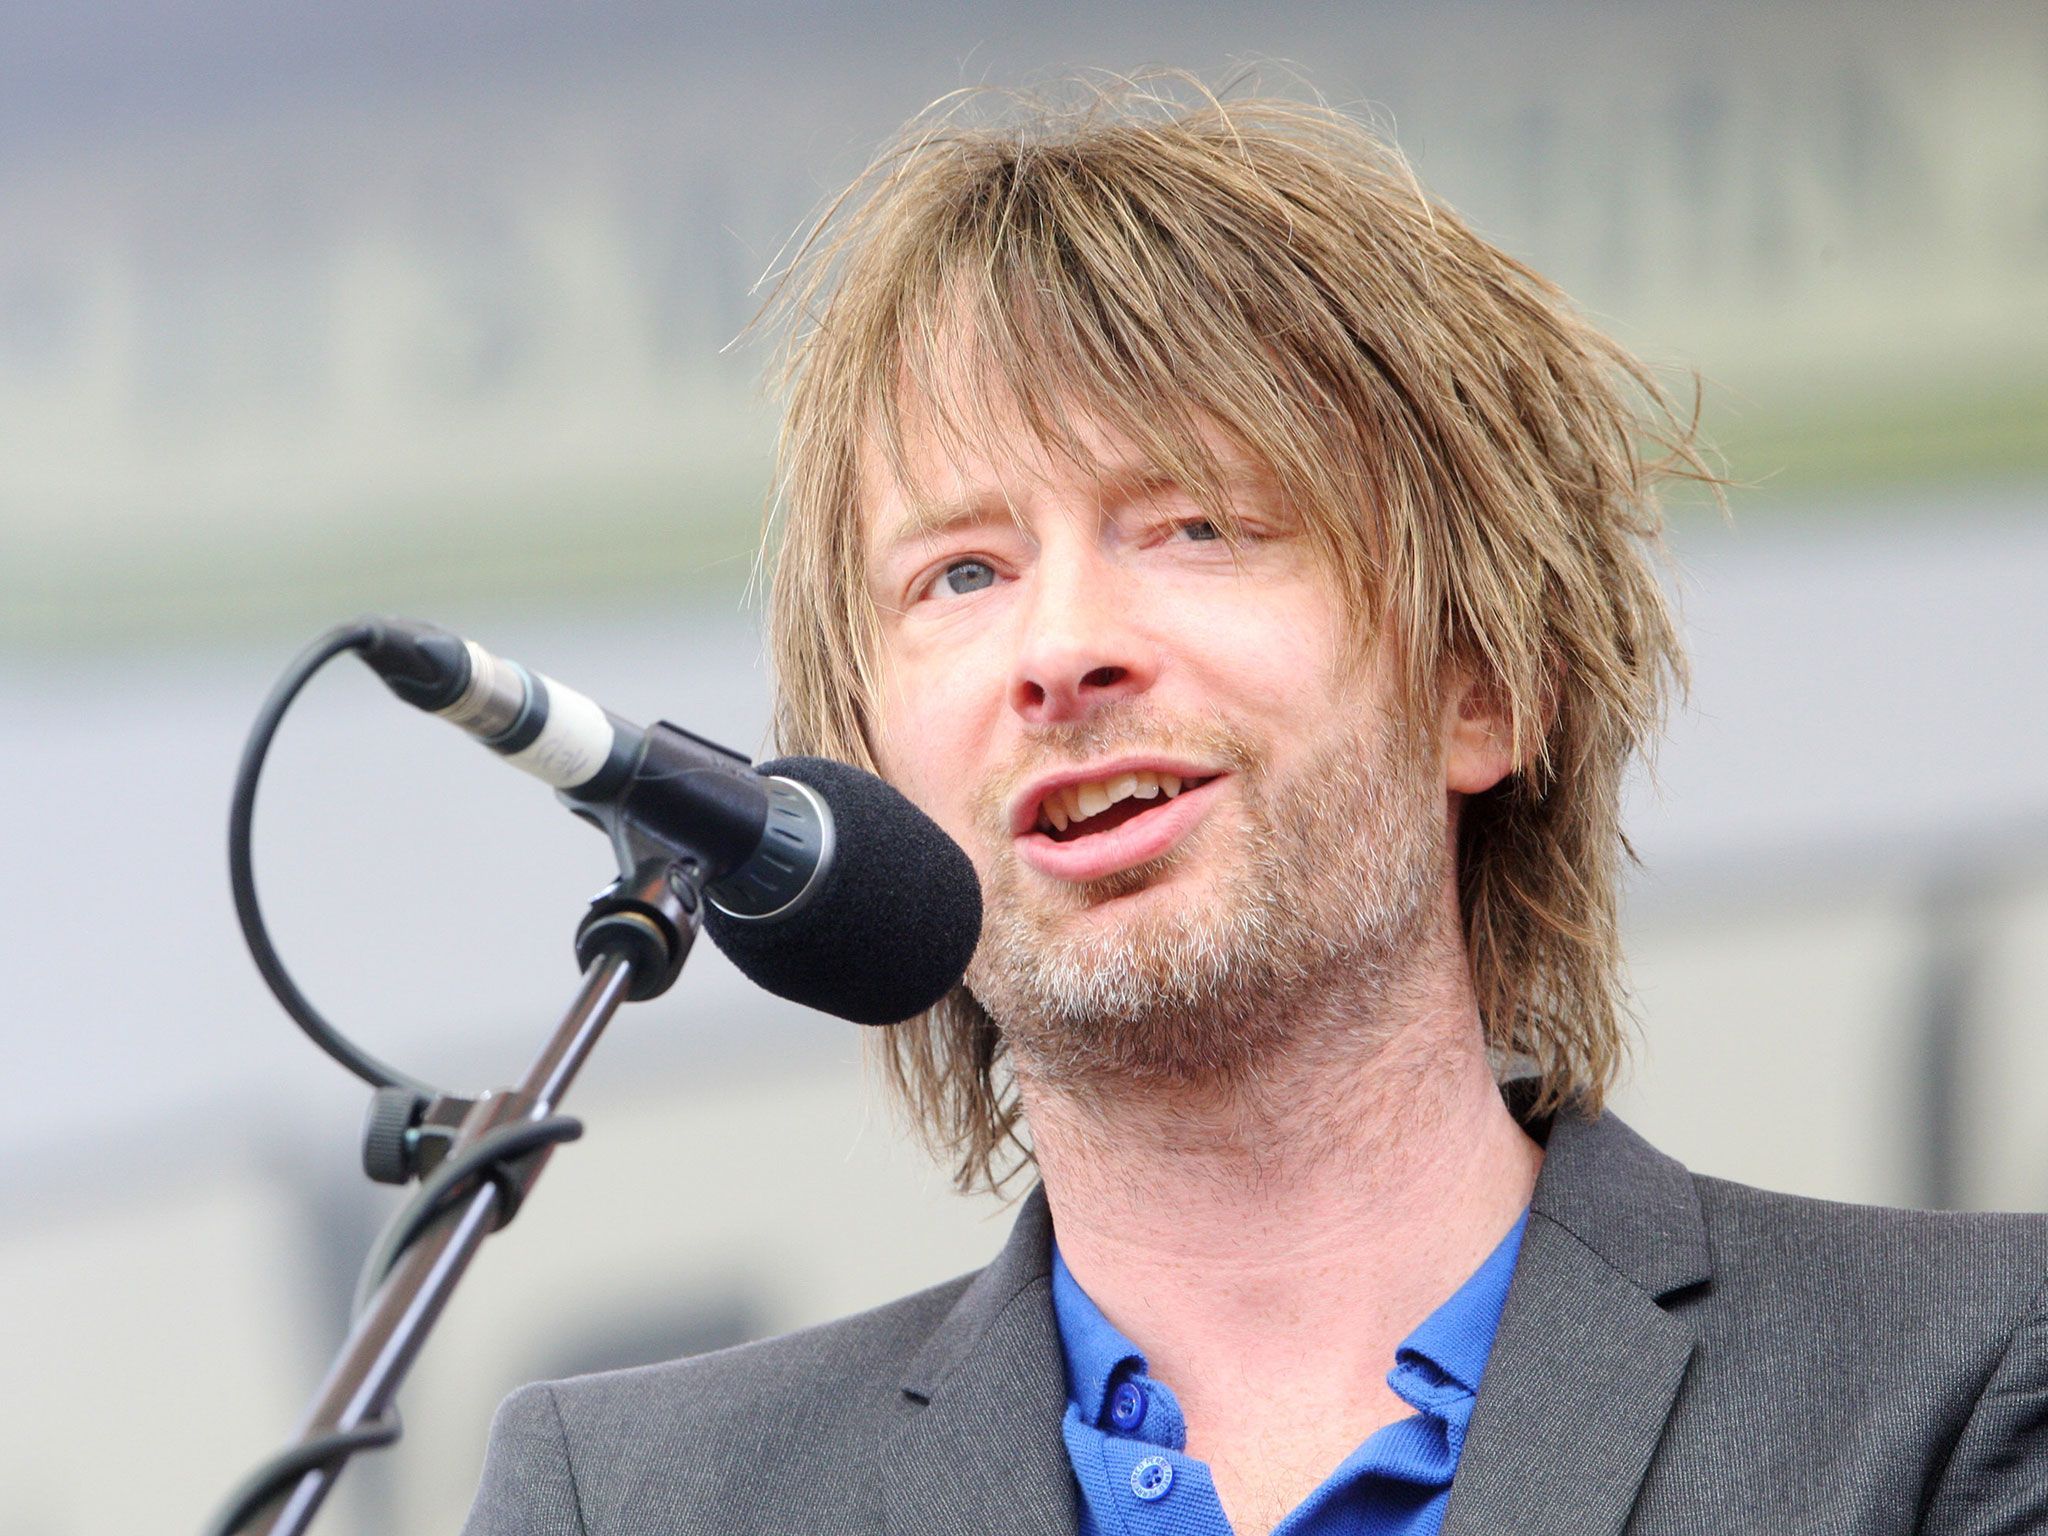 "Sail to the Moon" - Thom Yorke (Radiohead)